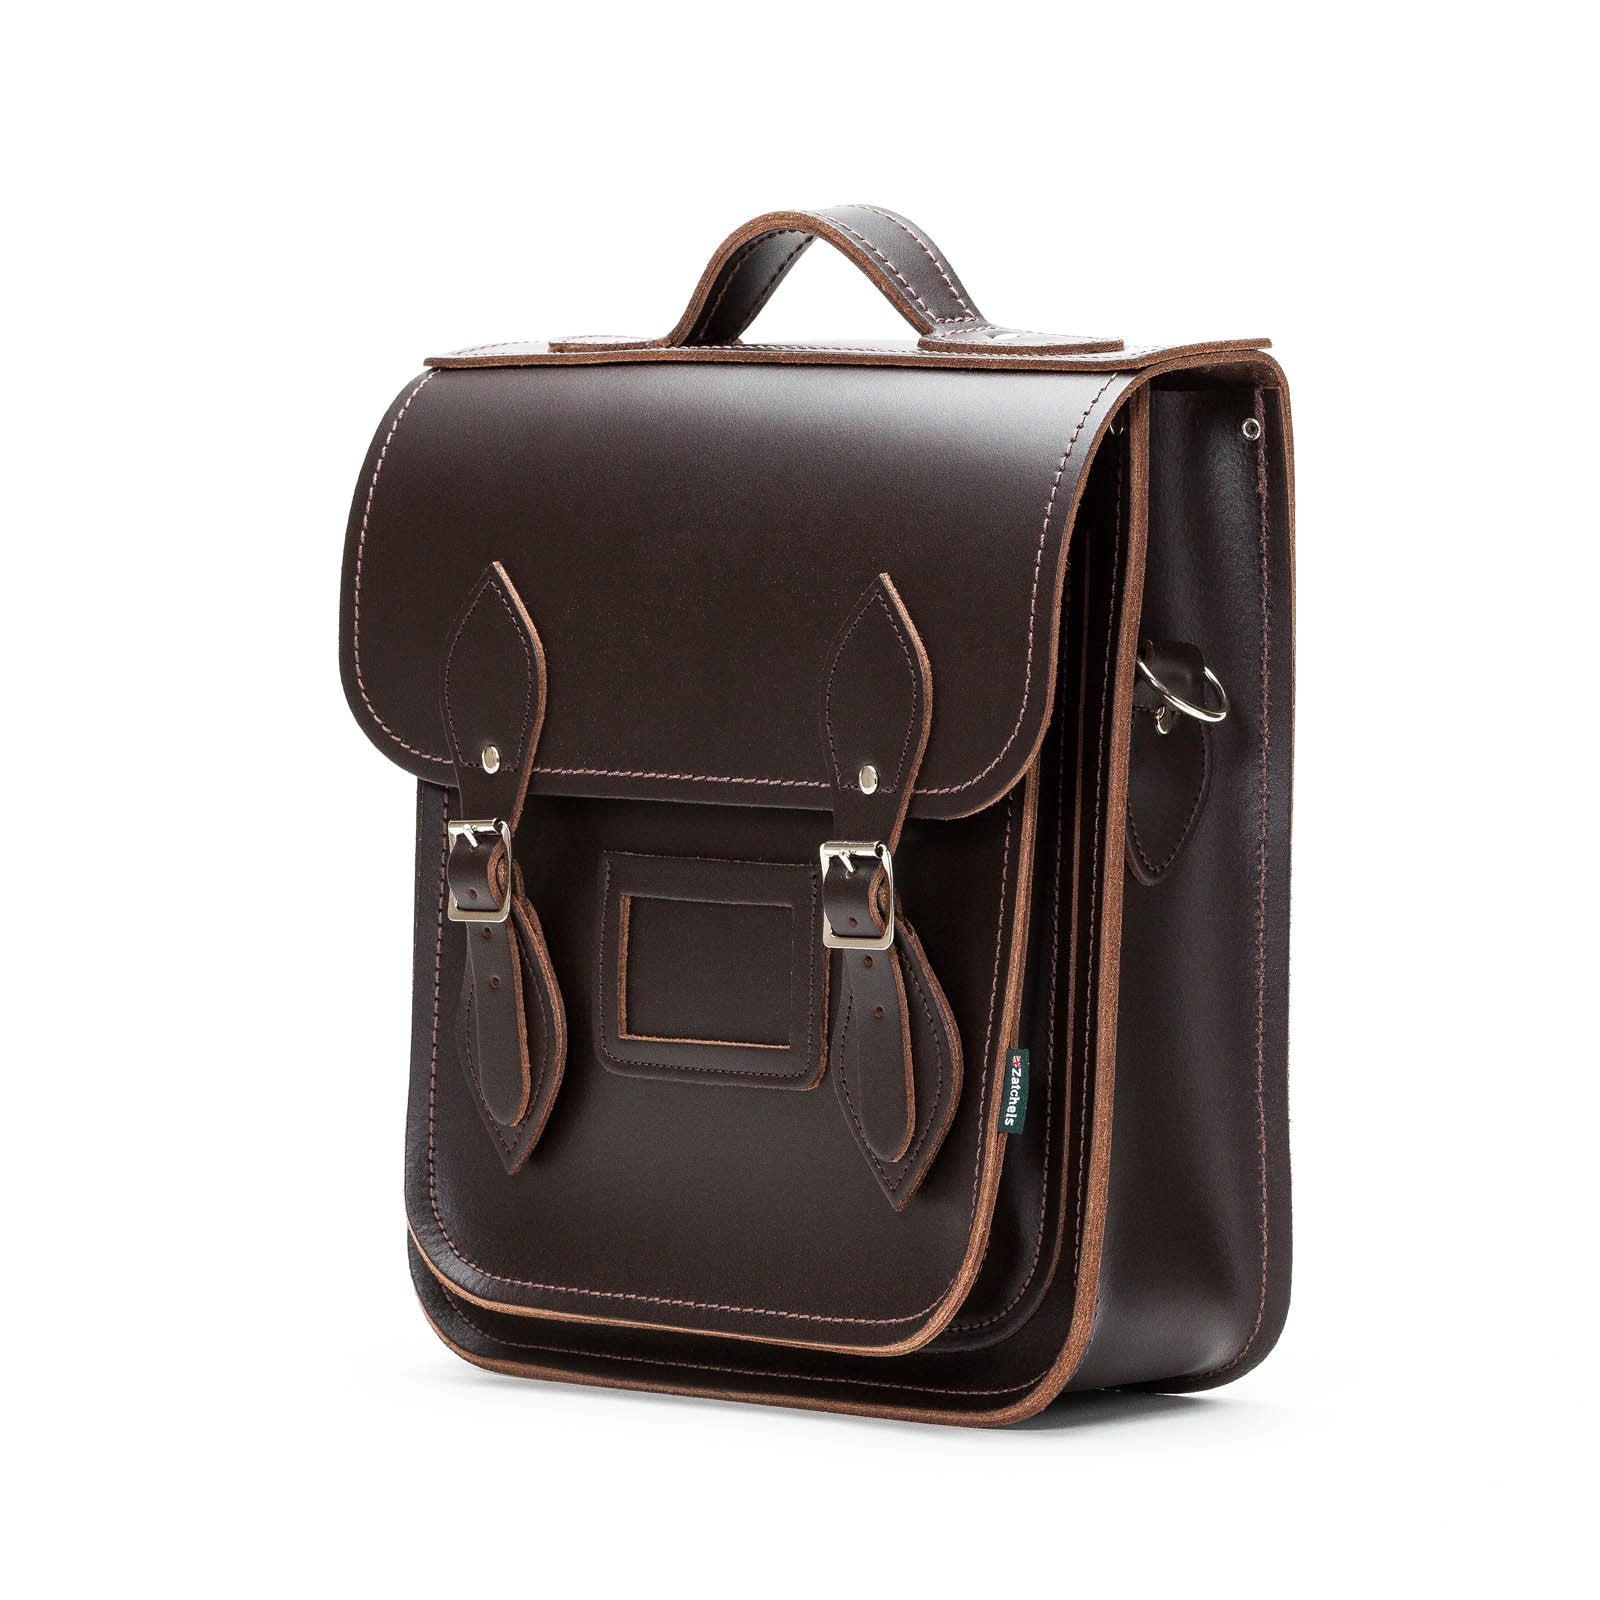 Backpack leather rustic messenger bag brown bags